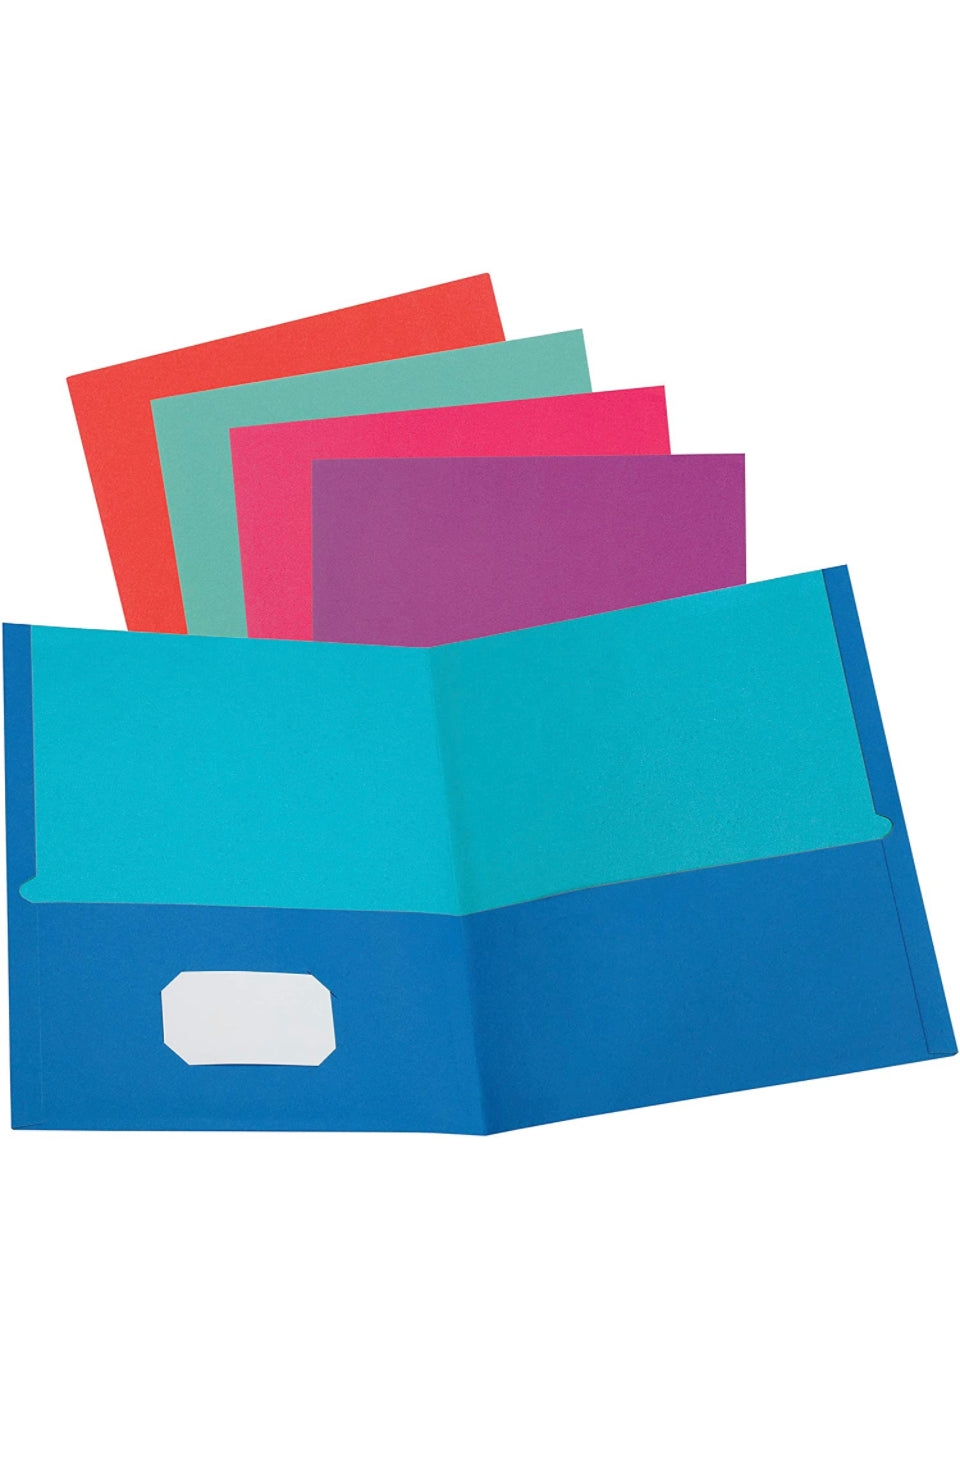 2 Pocket Folders Assorted Colors | Pocket Folder | Premium Supplies TX